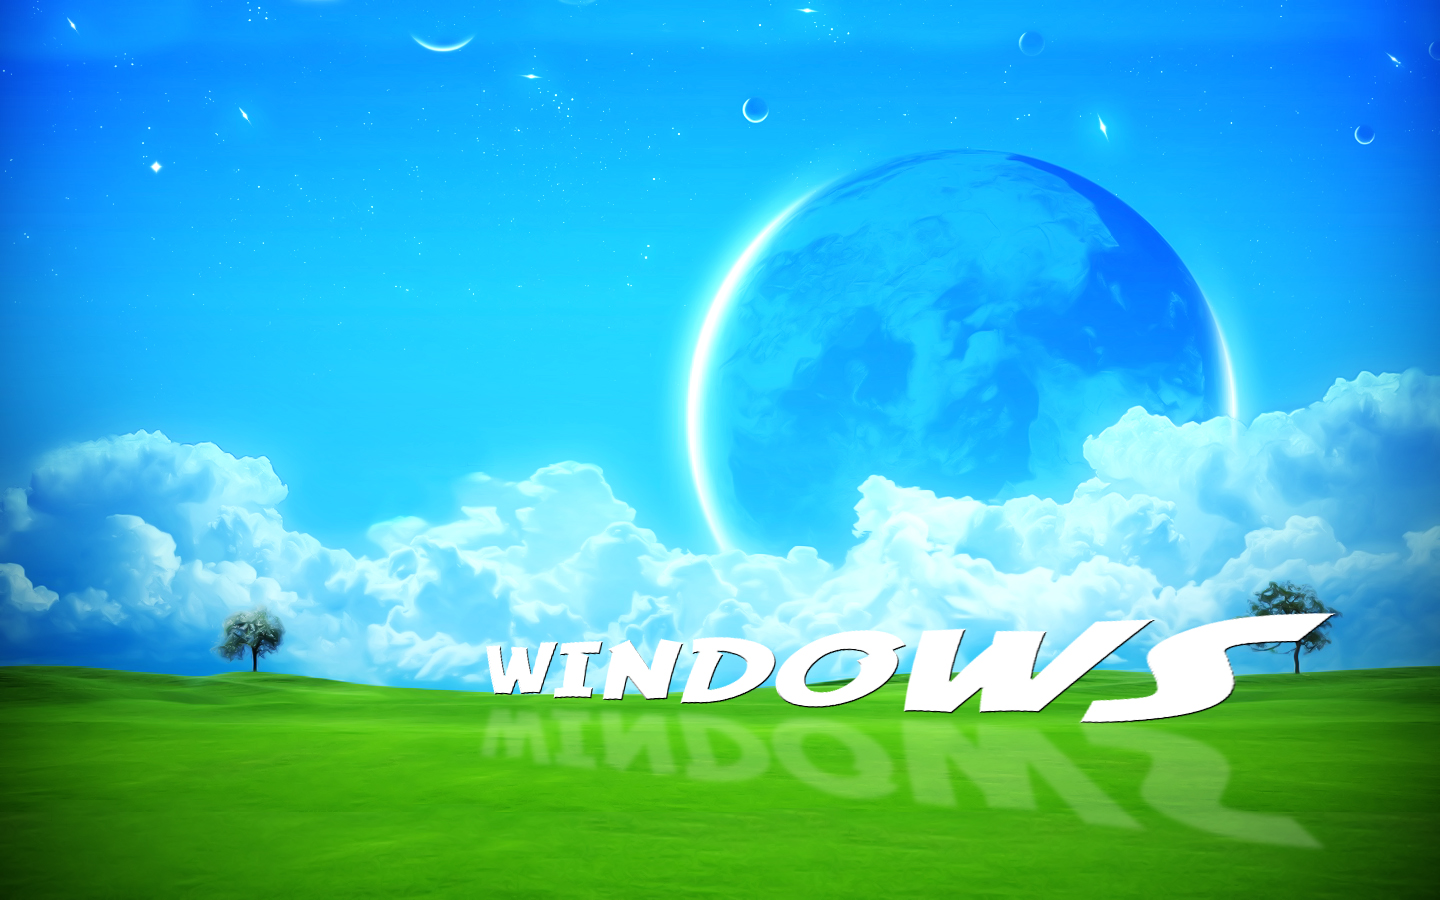 minecraft animated wallpapers windows 10